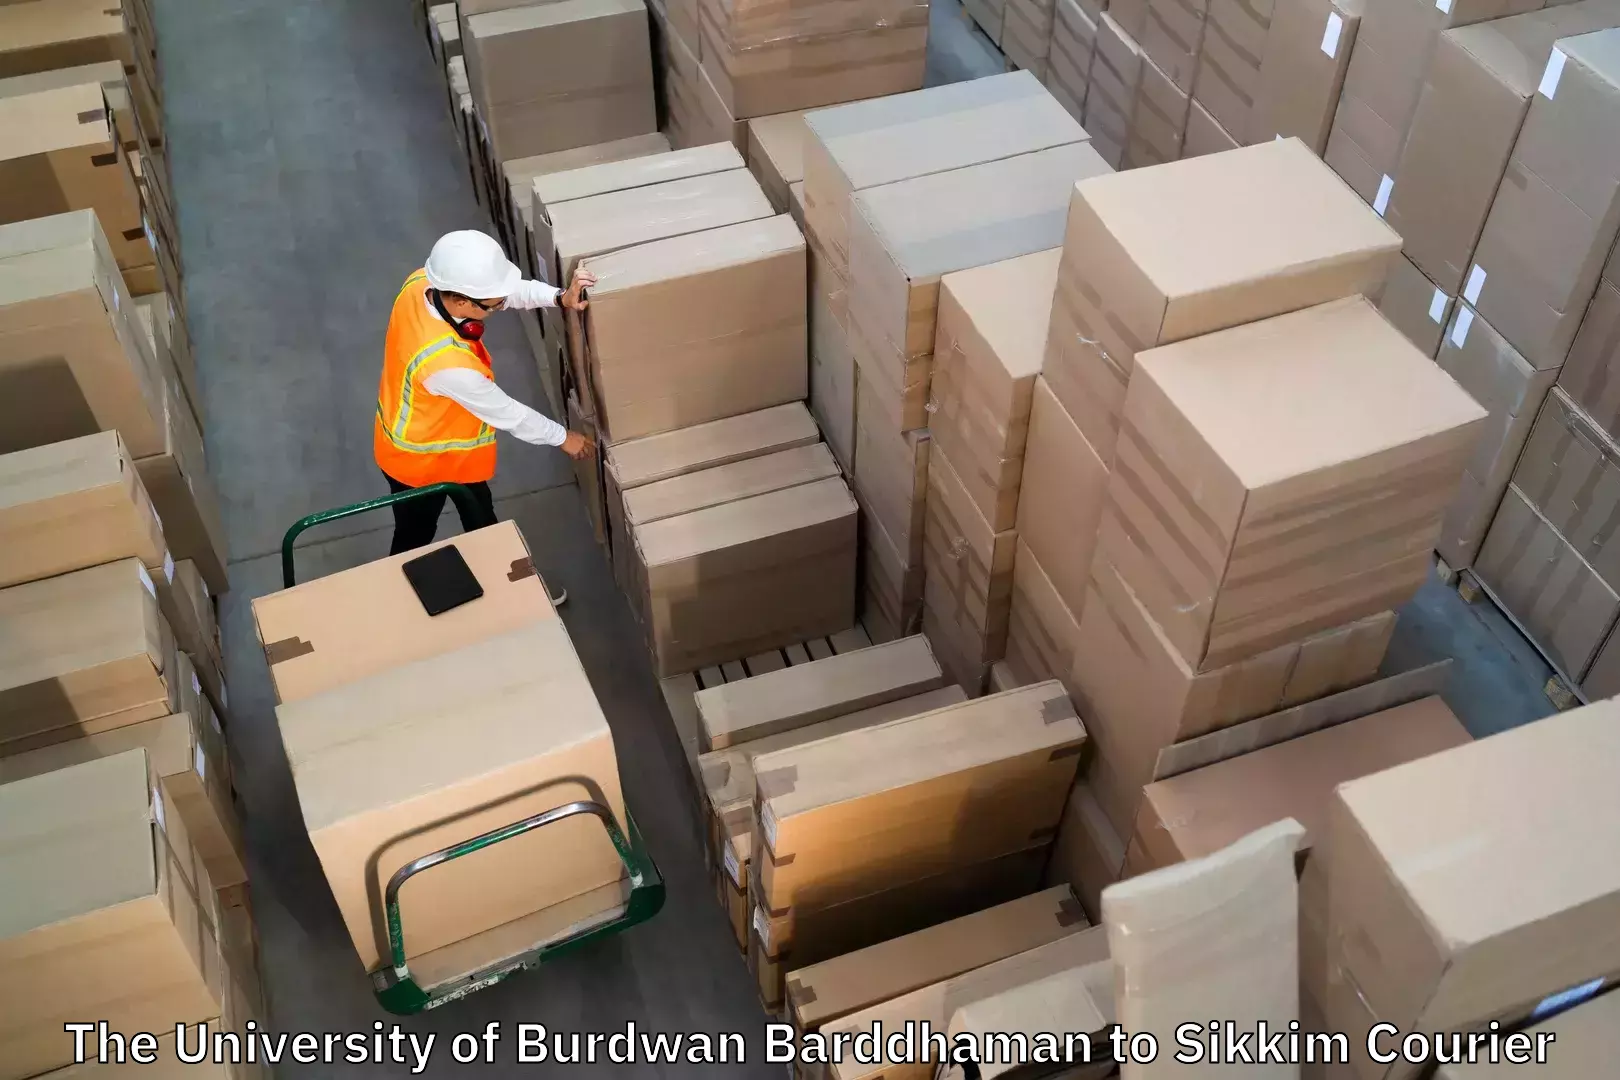 Baggage shipping service The University of Burdwan Barddhaman to Sikkim